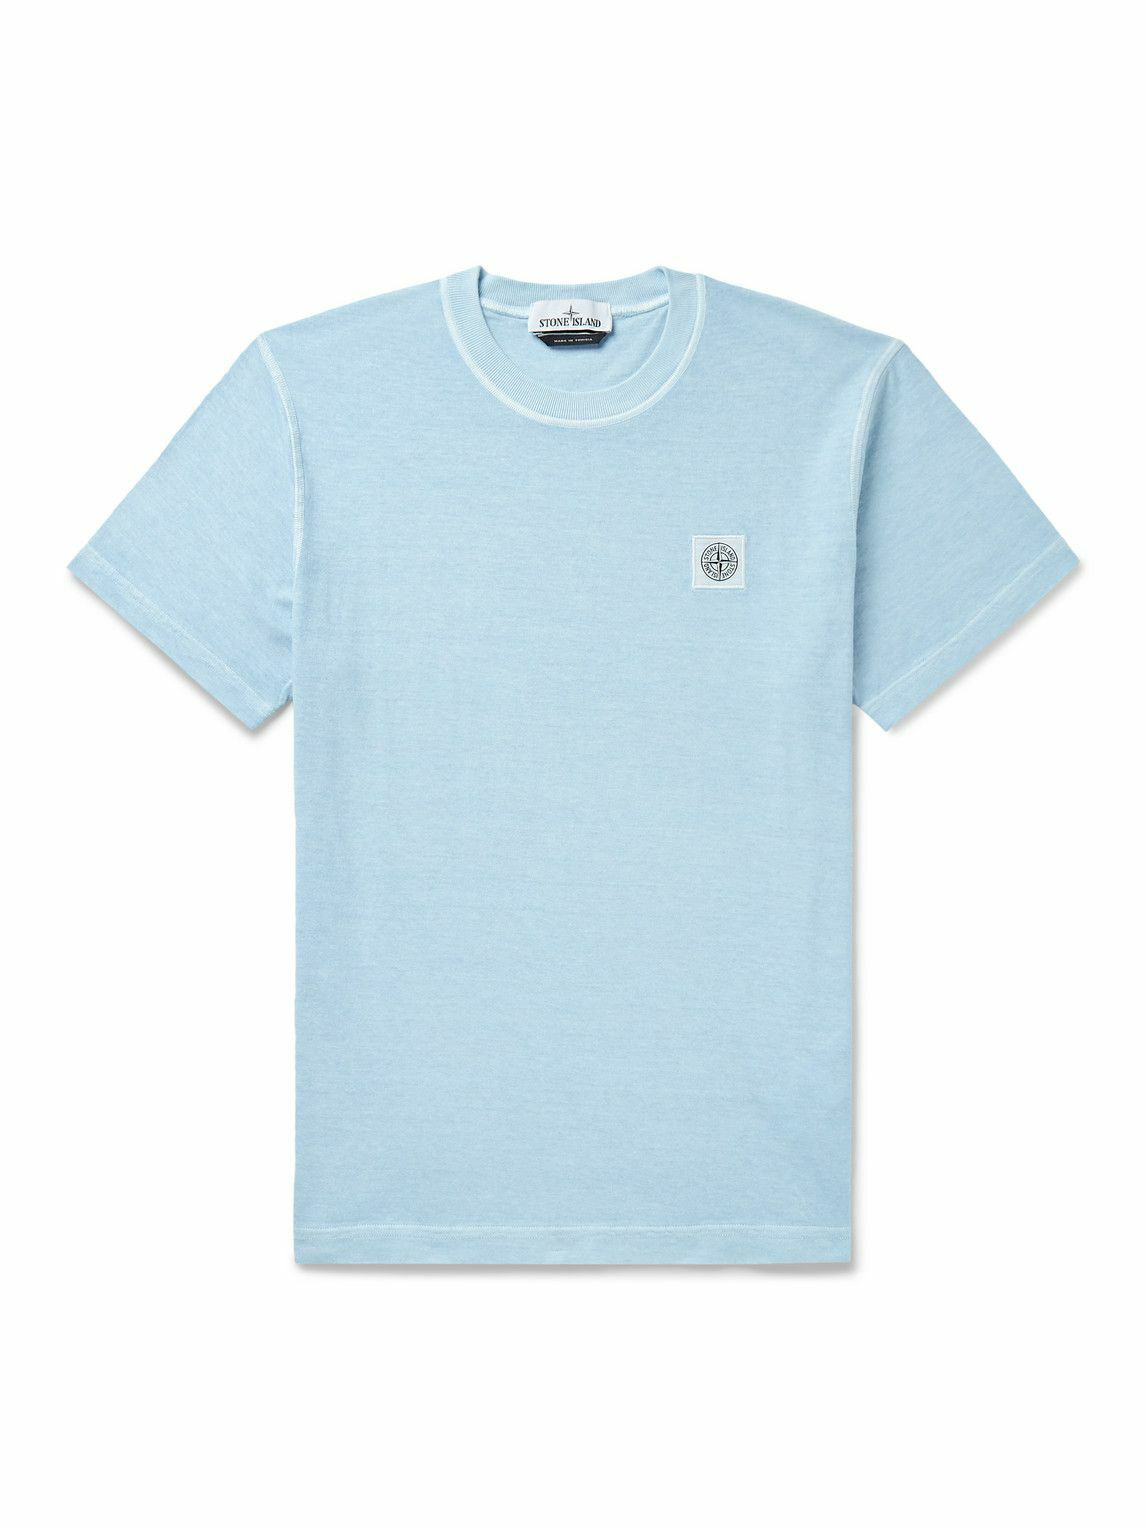 Stone Island - Logo-Appliquéd Cotton-Jersey T-Shirt - Blue Stone Island